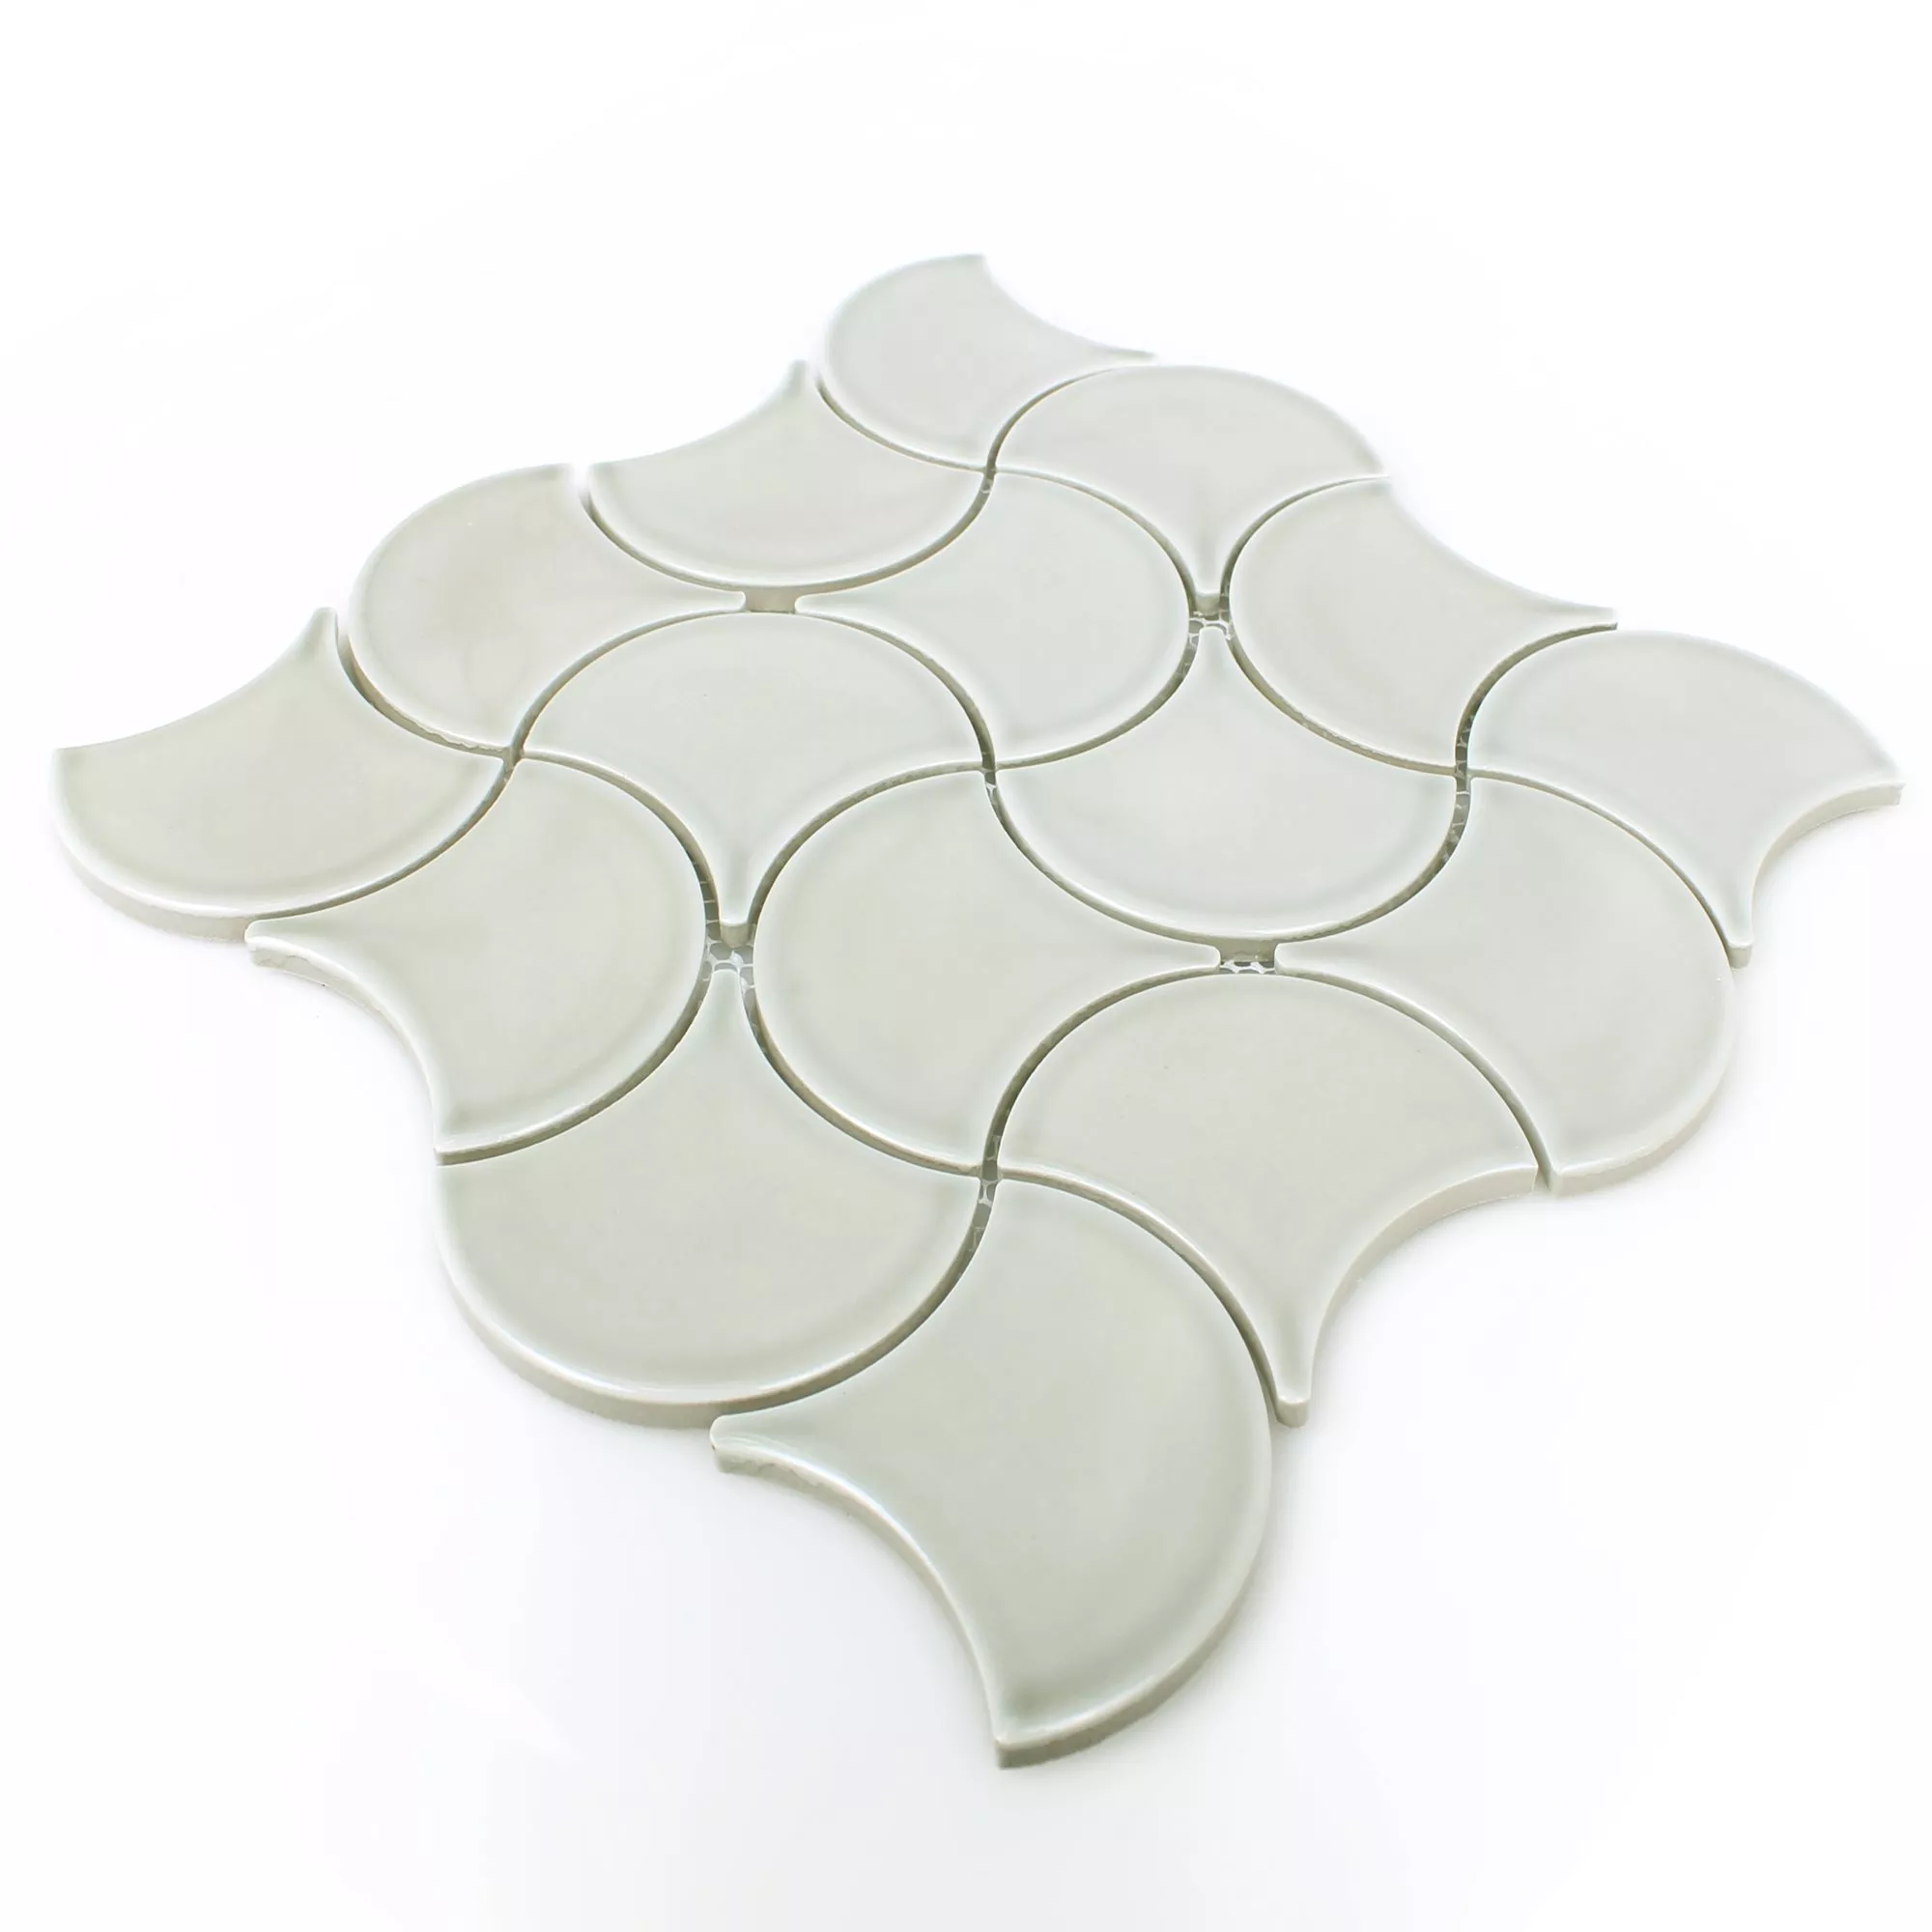 Ceramic Mosaic Tiles Toledo Wave Grey